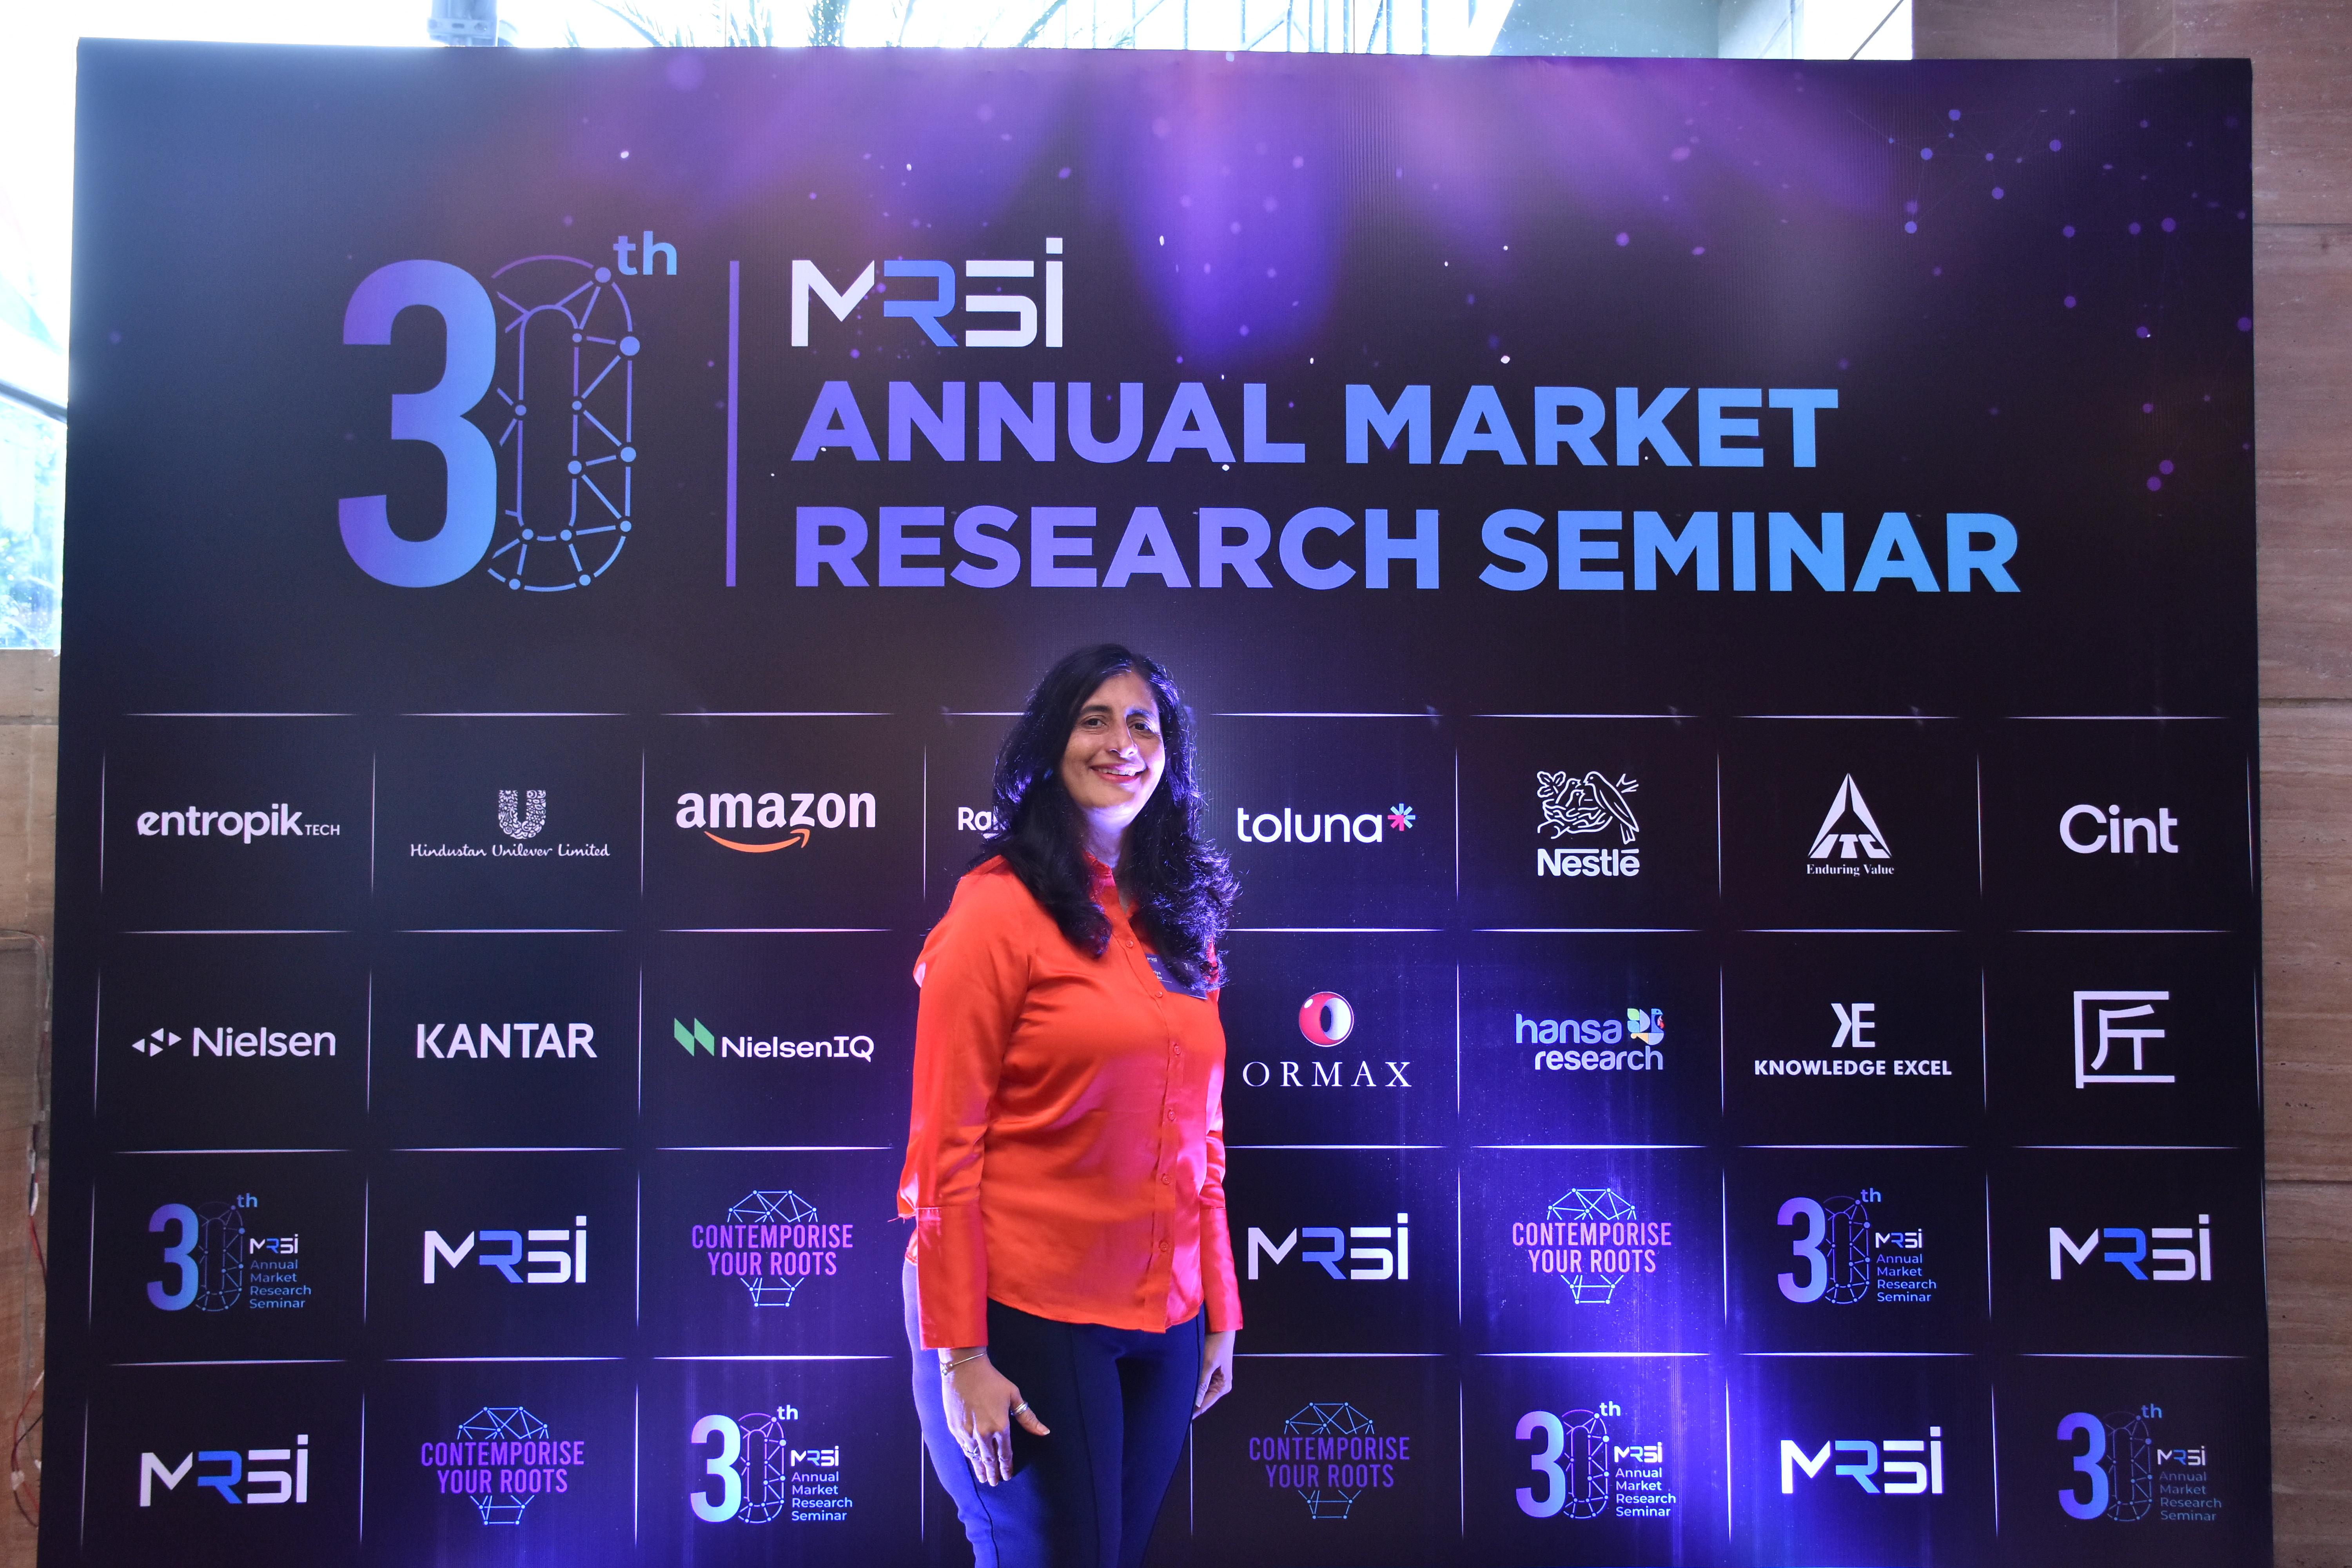 30th Annual Market Research Seminar, Delhi, November 2022